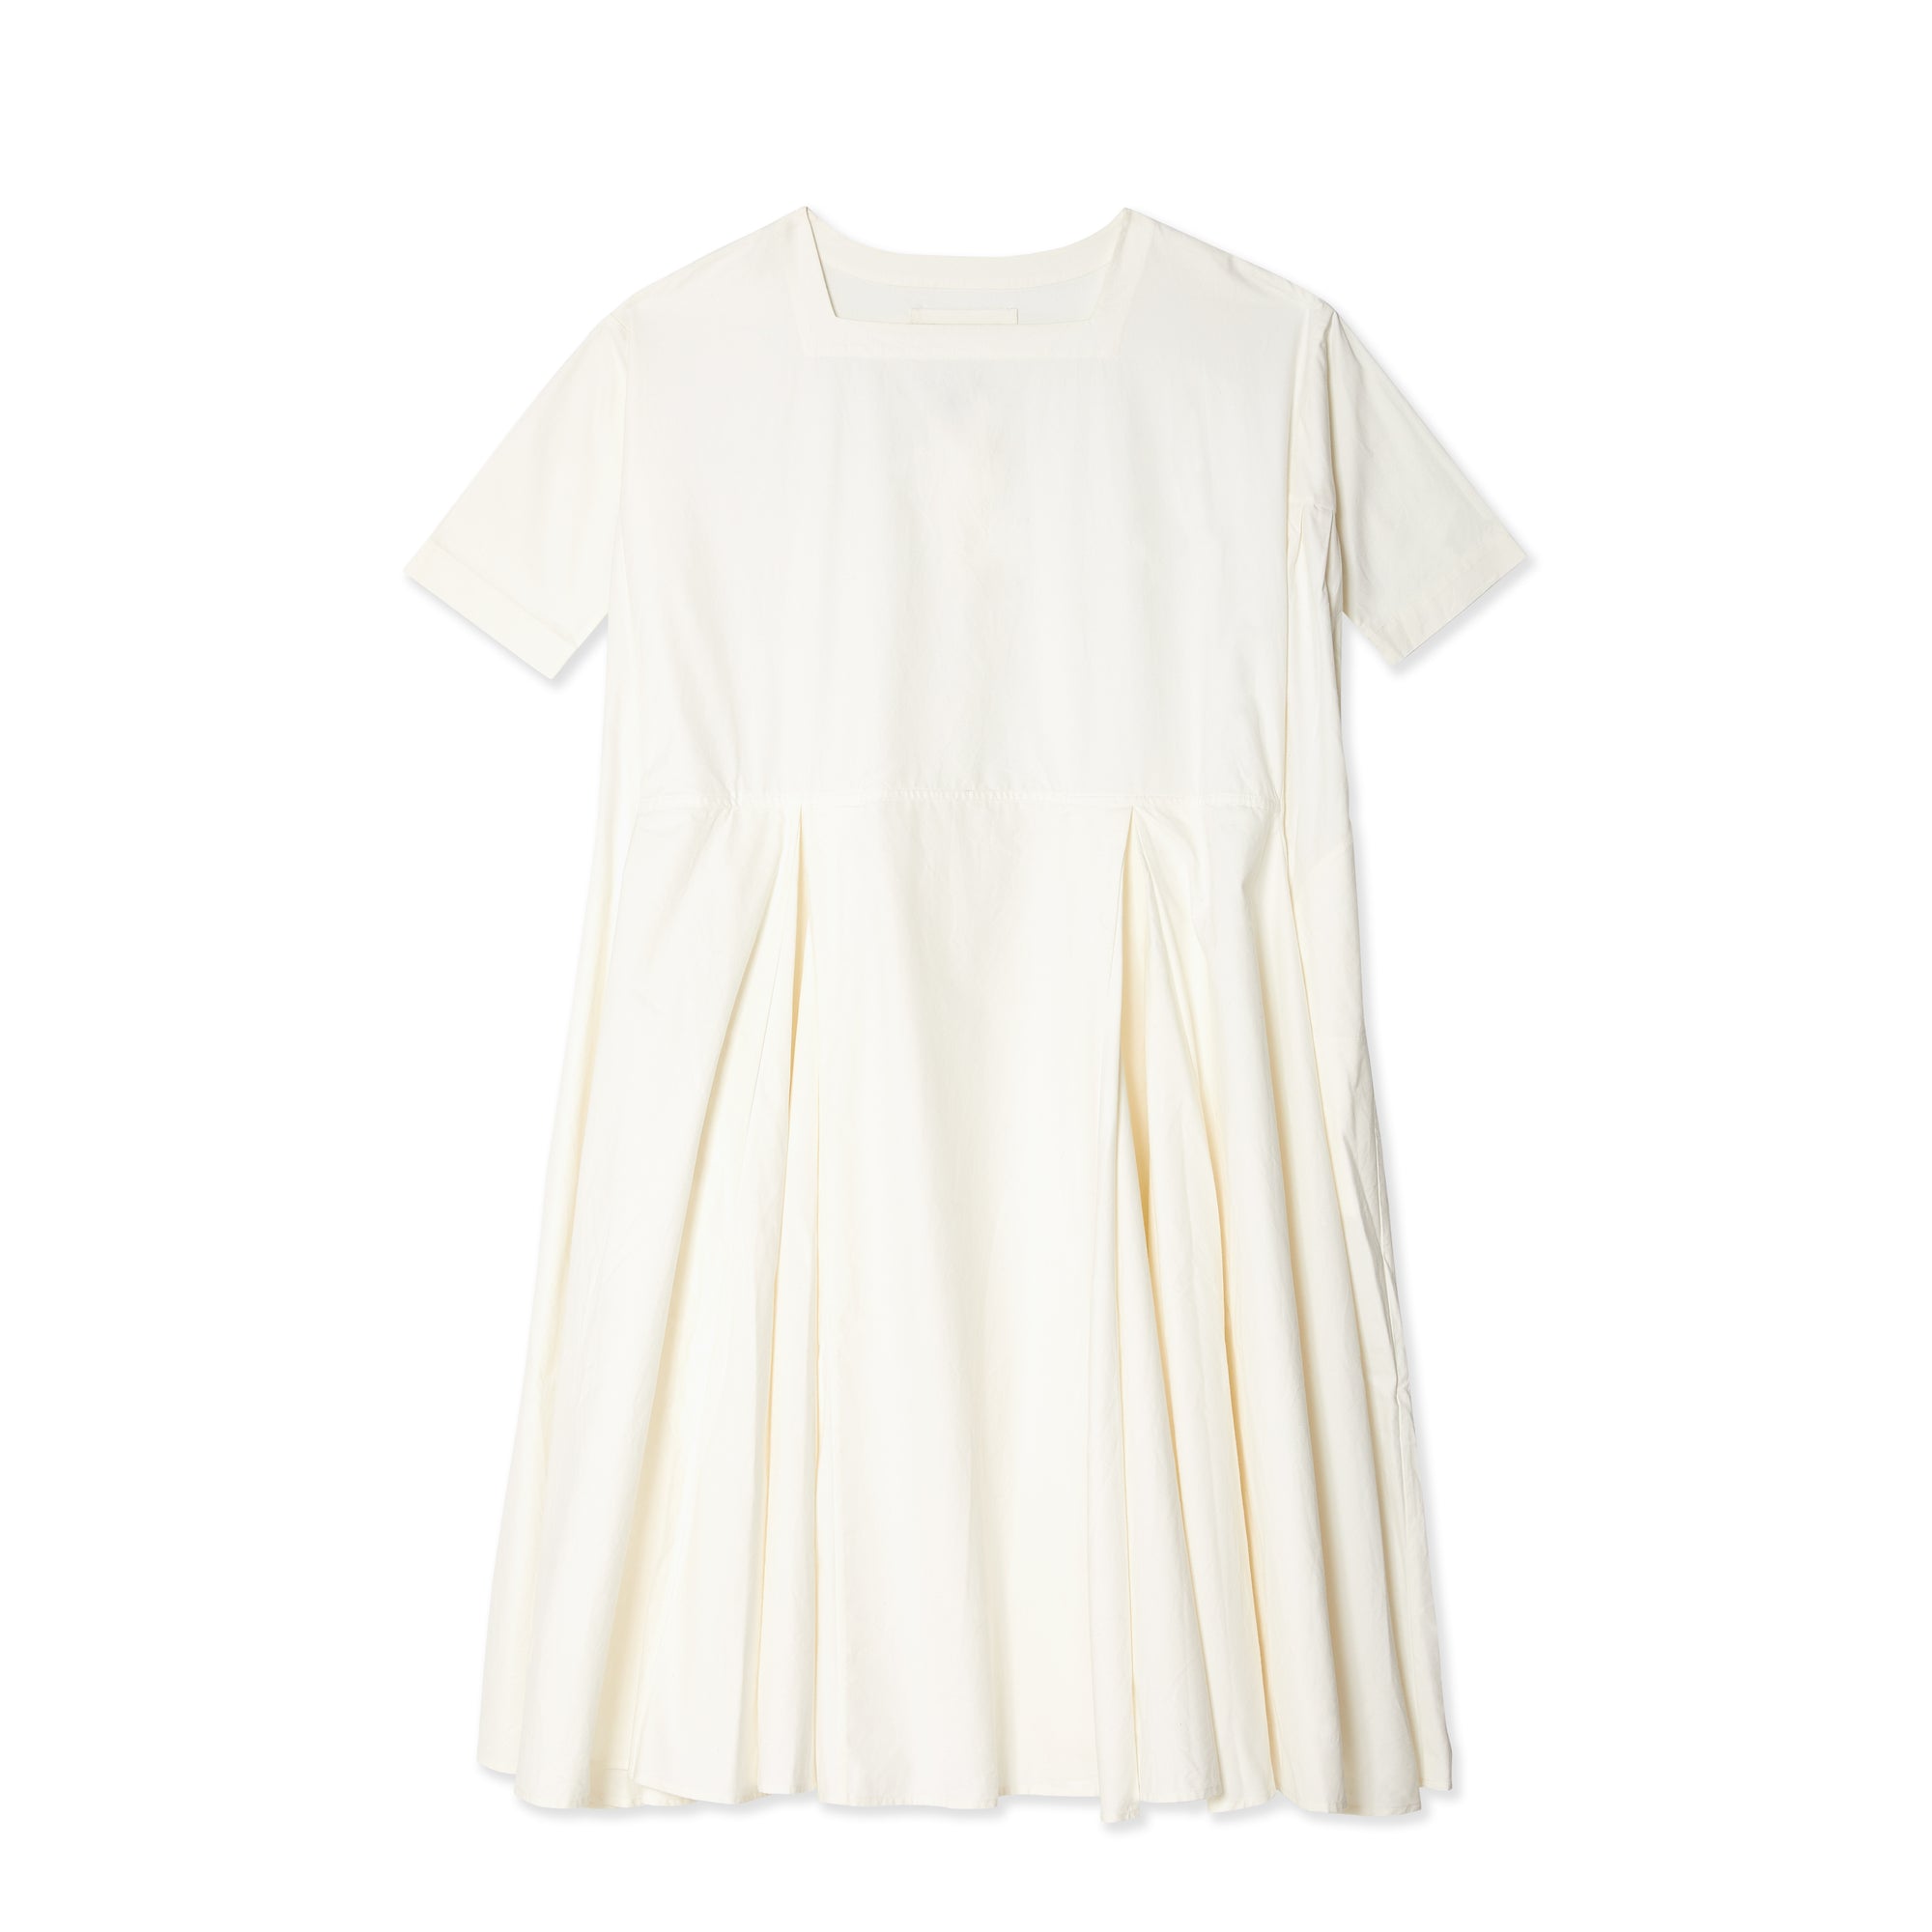 Egg Trading - Women's Pleated Dress - (White) view 1